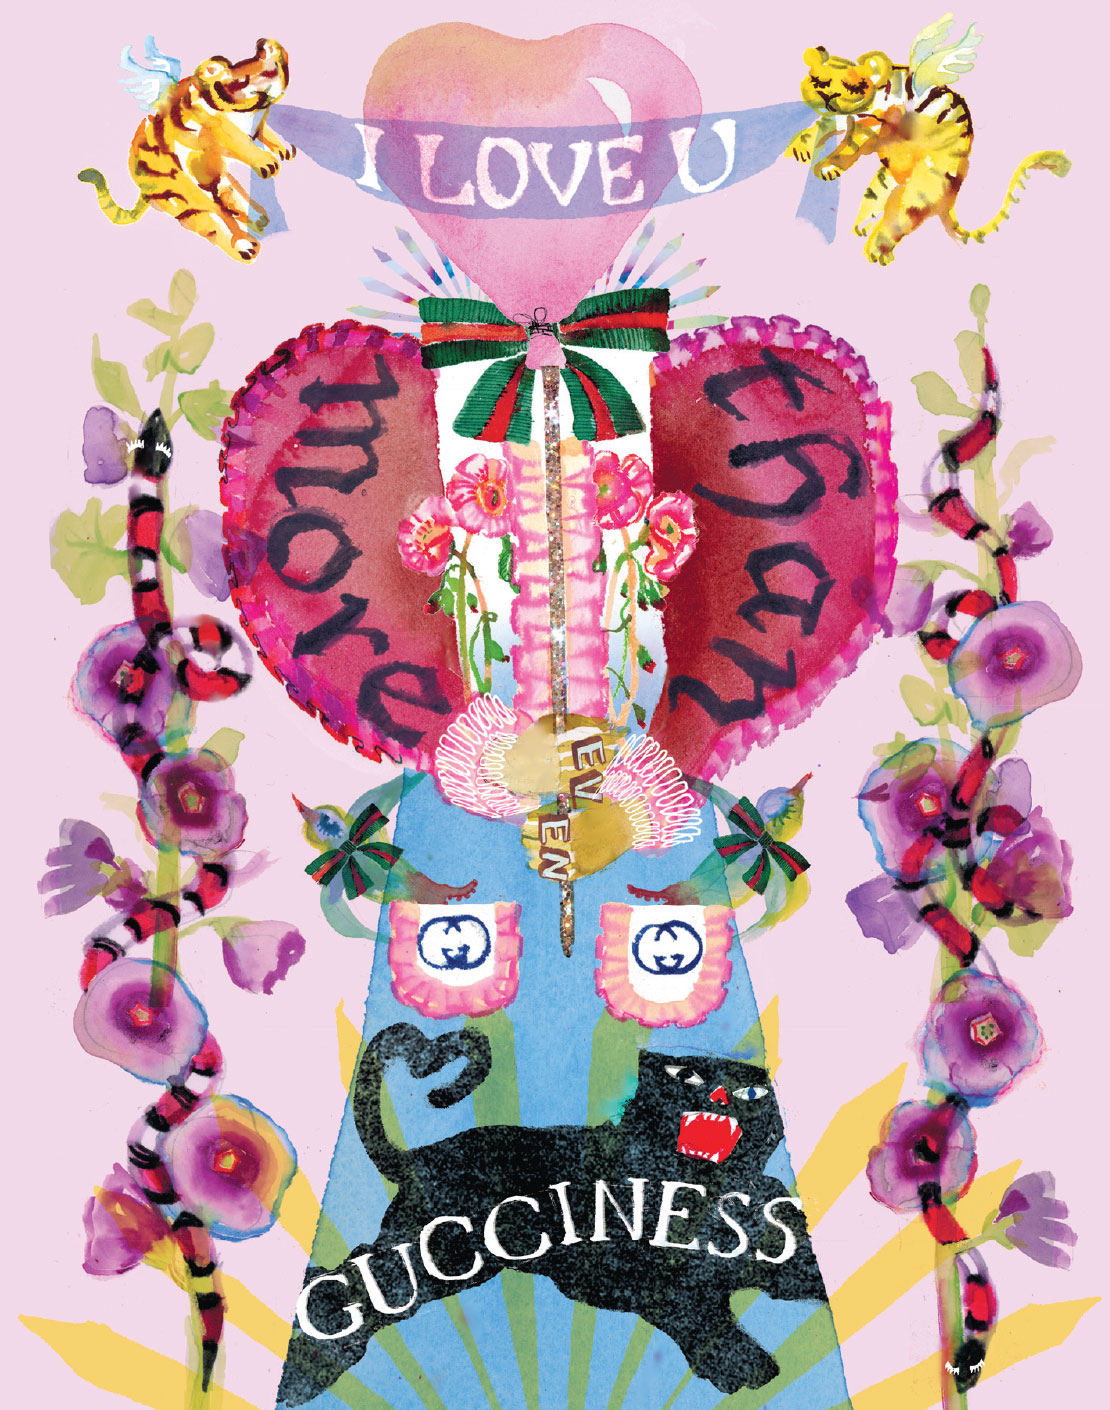 Gucci Love watercolor greeting card by Masha D'yansMasha